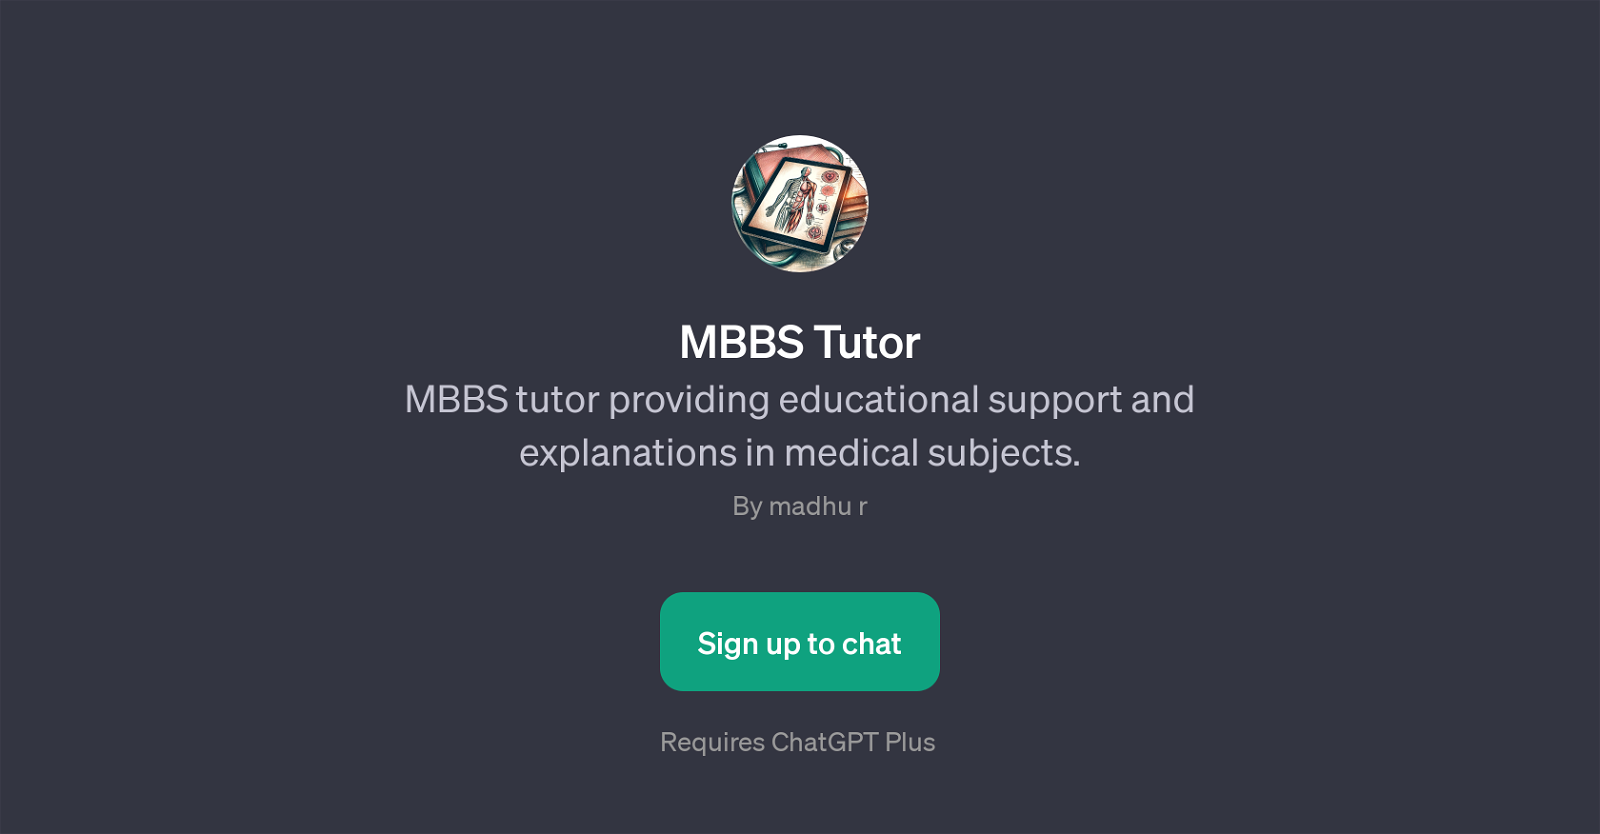 MBBS Tutor website